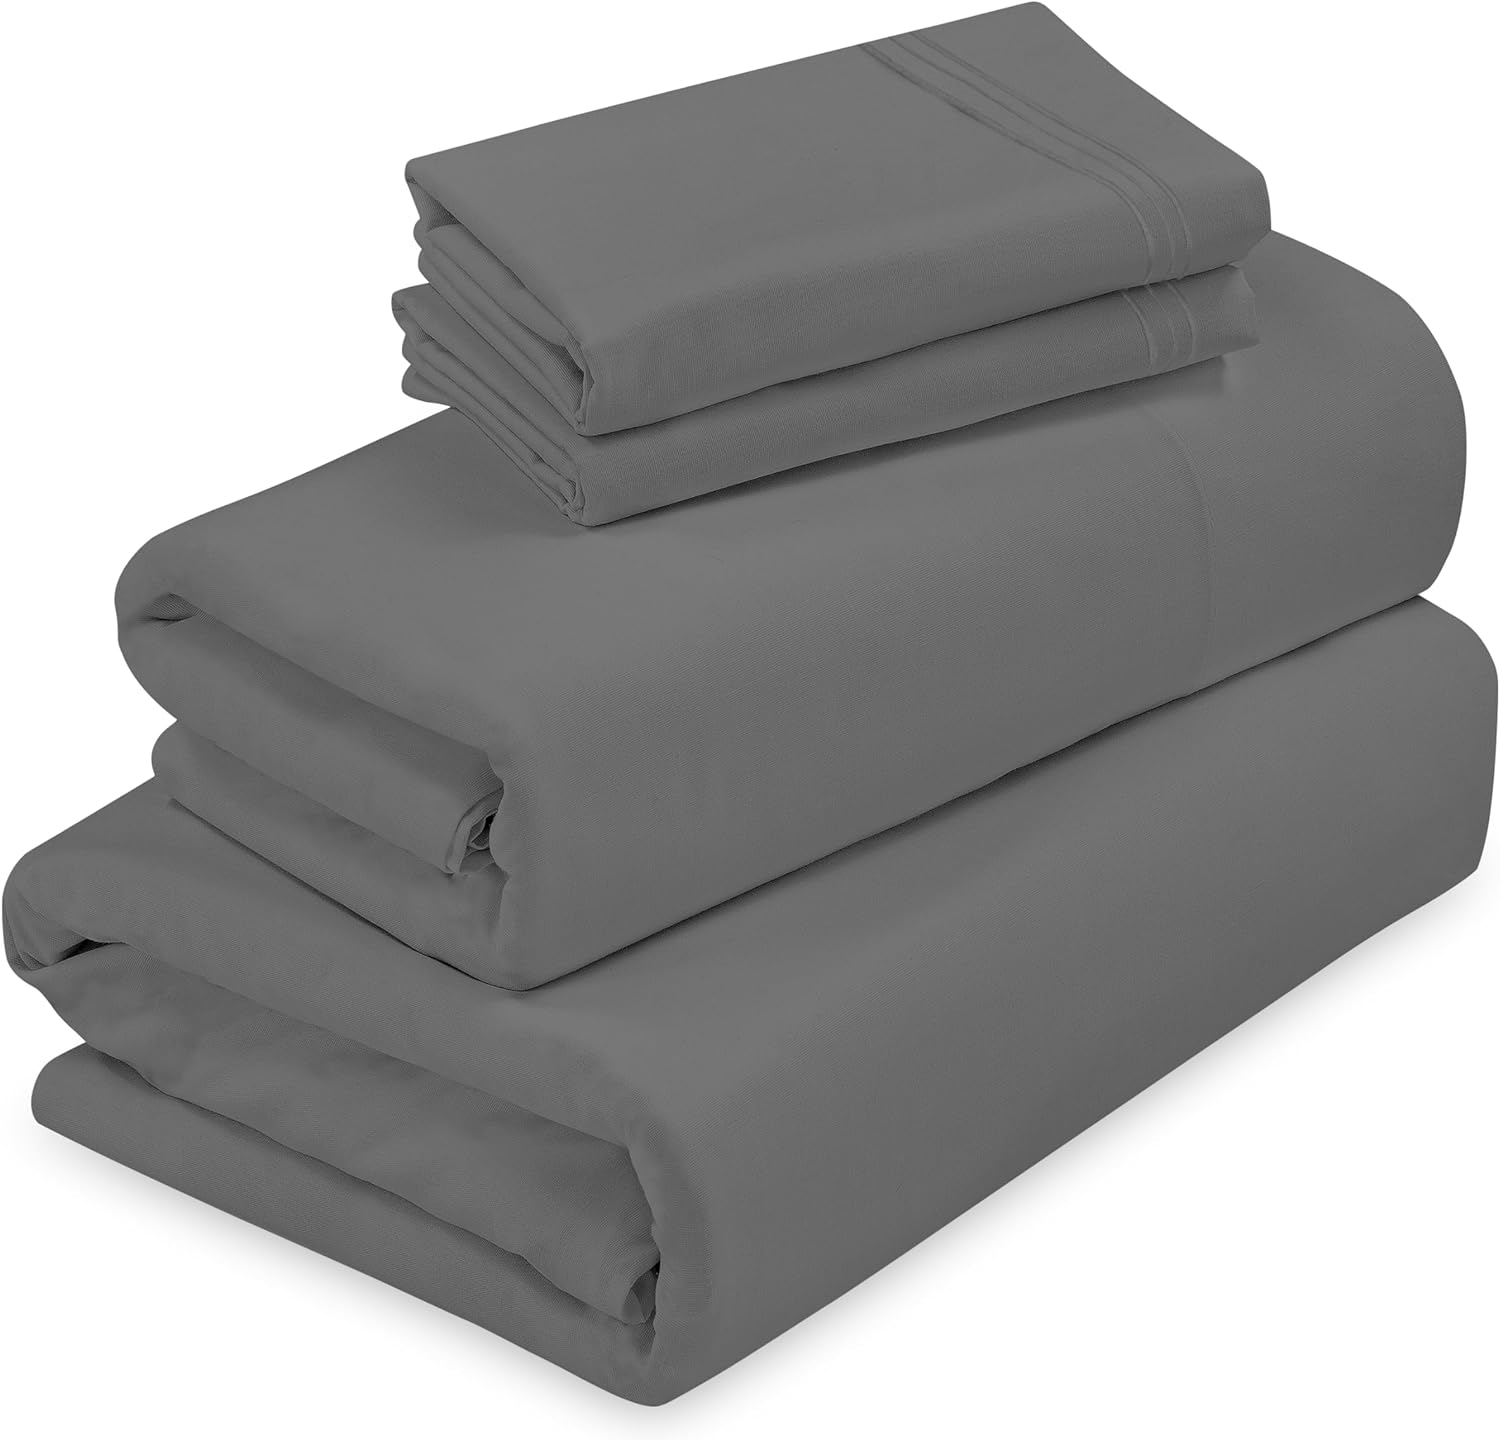 ROYALE LINENS - 4 Piece King Bed Sheet - Soft Brushed Microfiber 1800 Bedding Set - 1 Fitted Sheet, 1 Flat Sheet, 2 Pillow Cases - Wrinkle & Fade Resistant Luxury King Size Sheet Set (King, Grey)